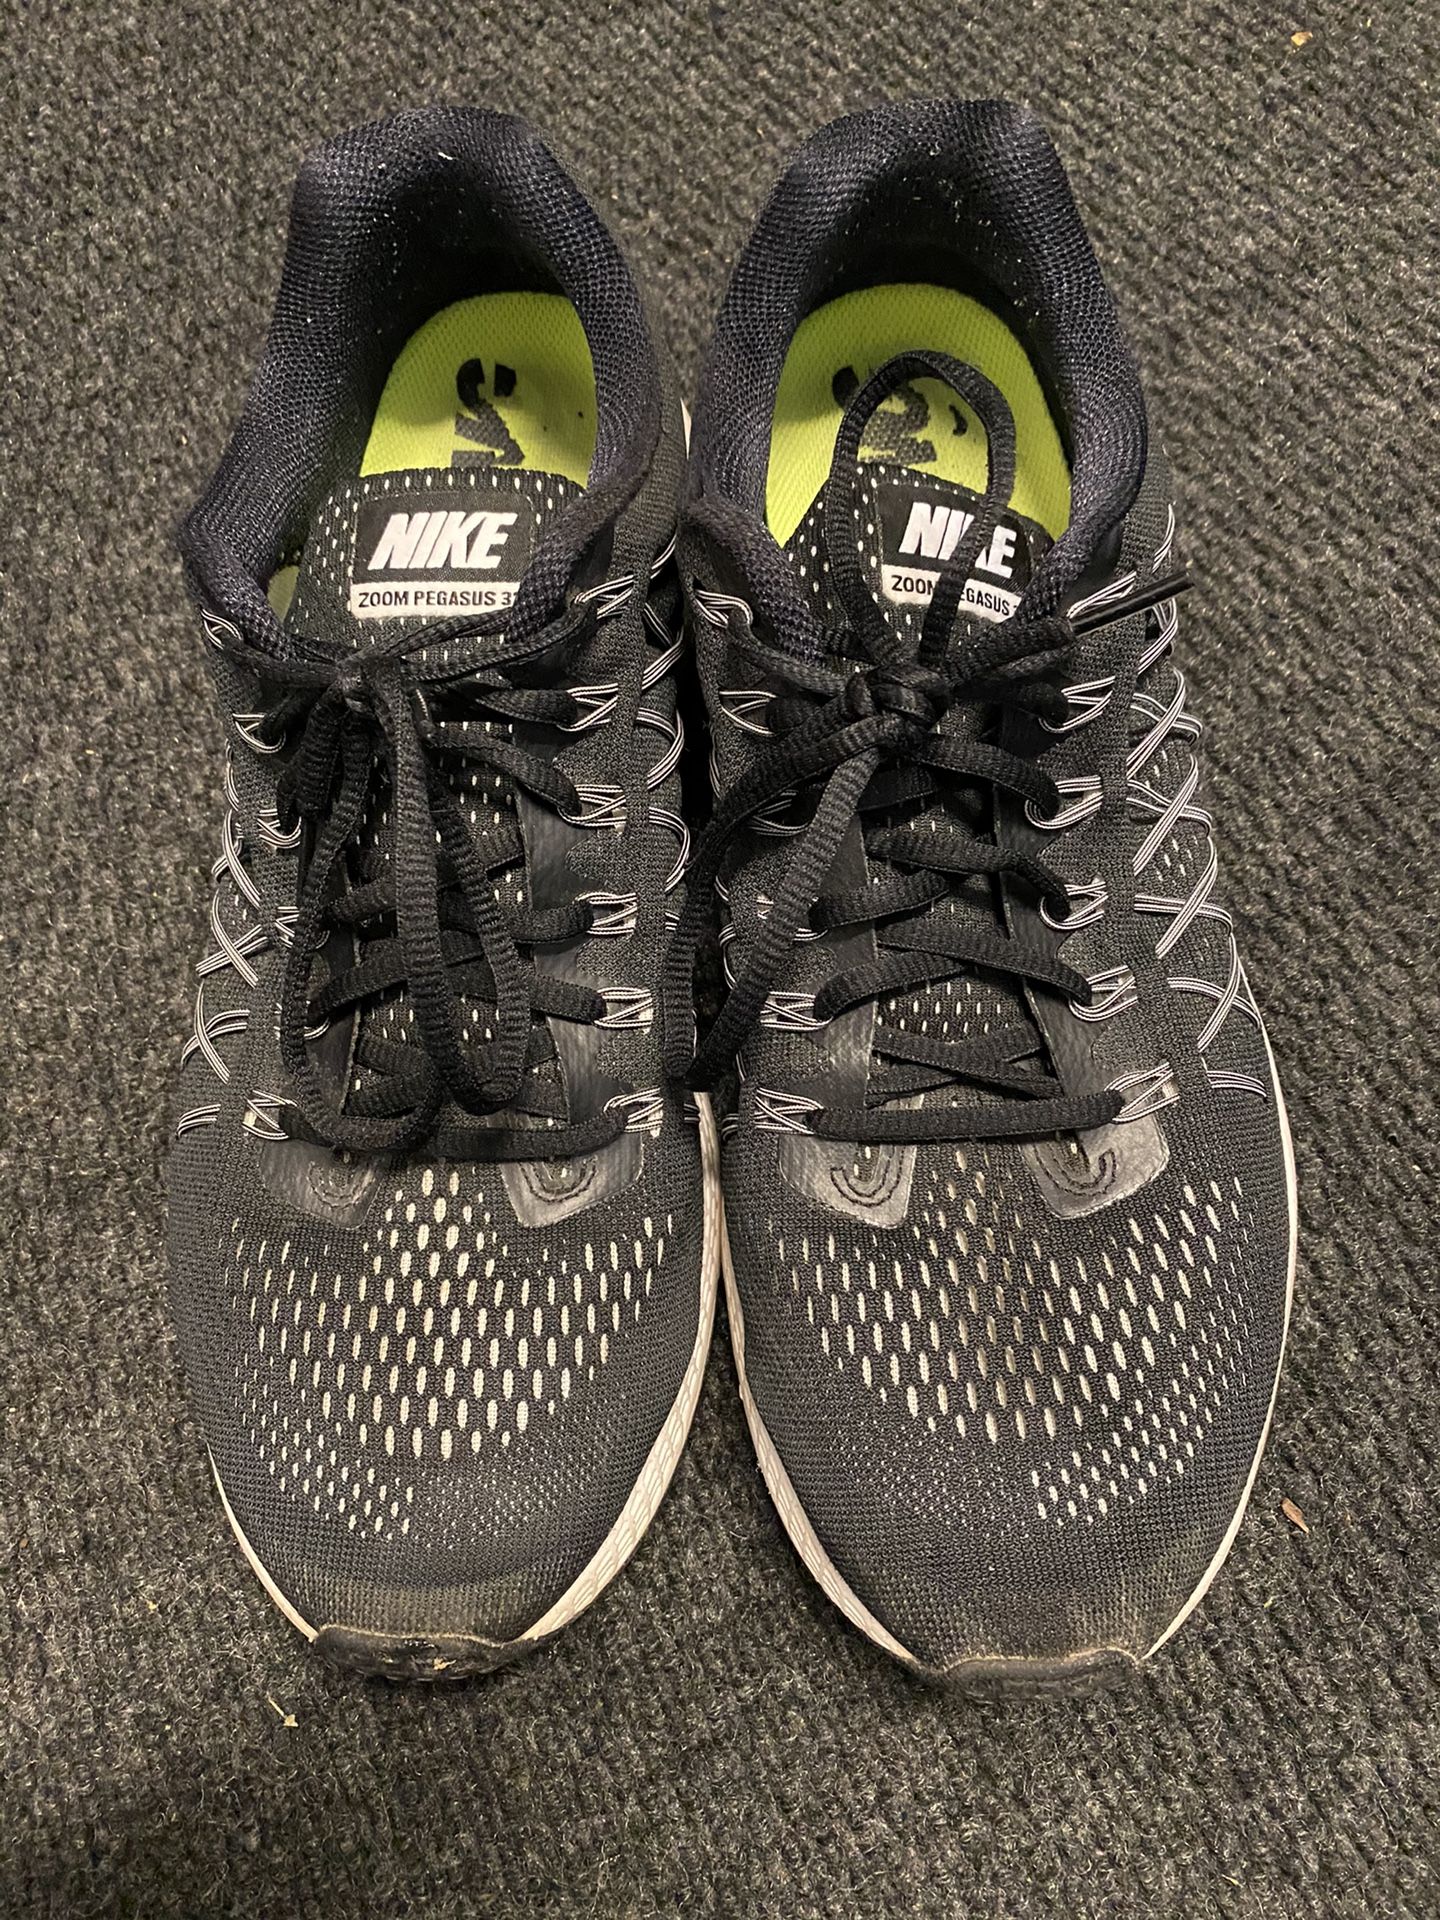 Nike shoes size 11